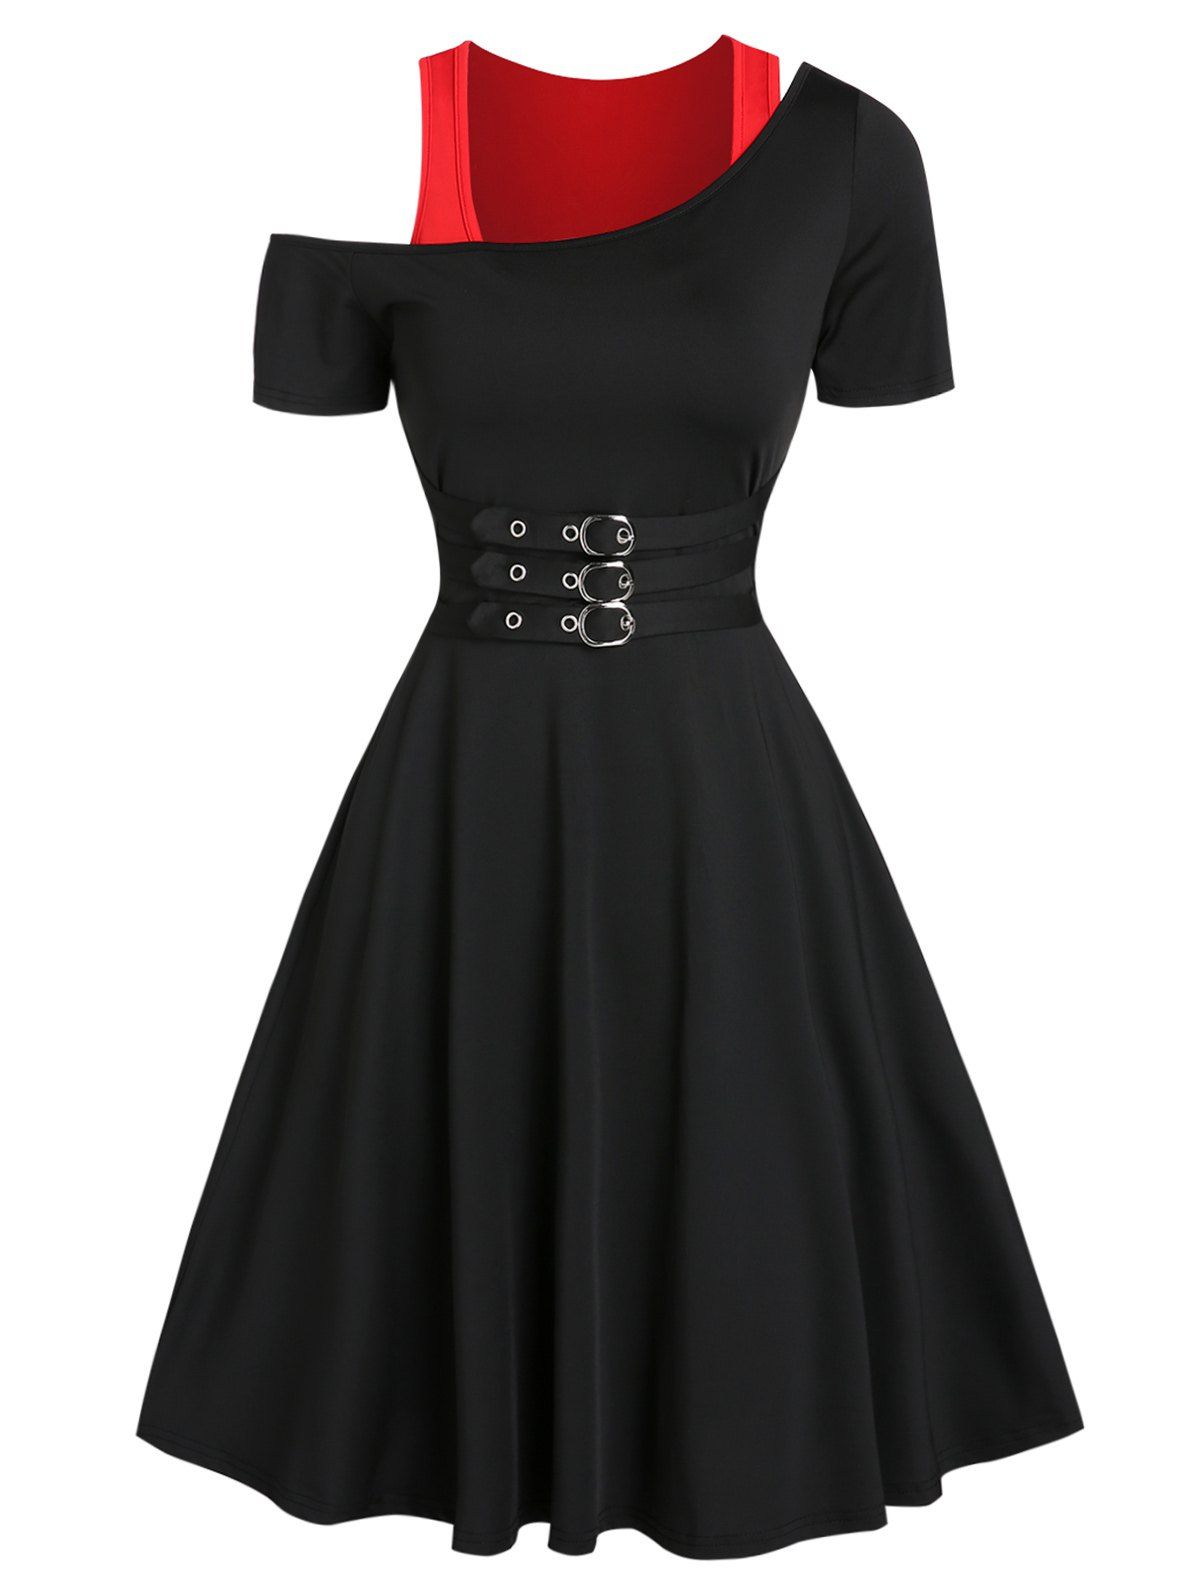 Contrast 2 In 1 A Line Mini Dress Gothic Cold Shoulder Buckles Short Sleeve Dress - BLACK L